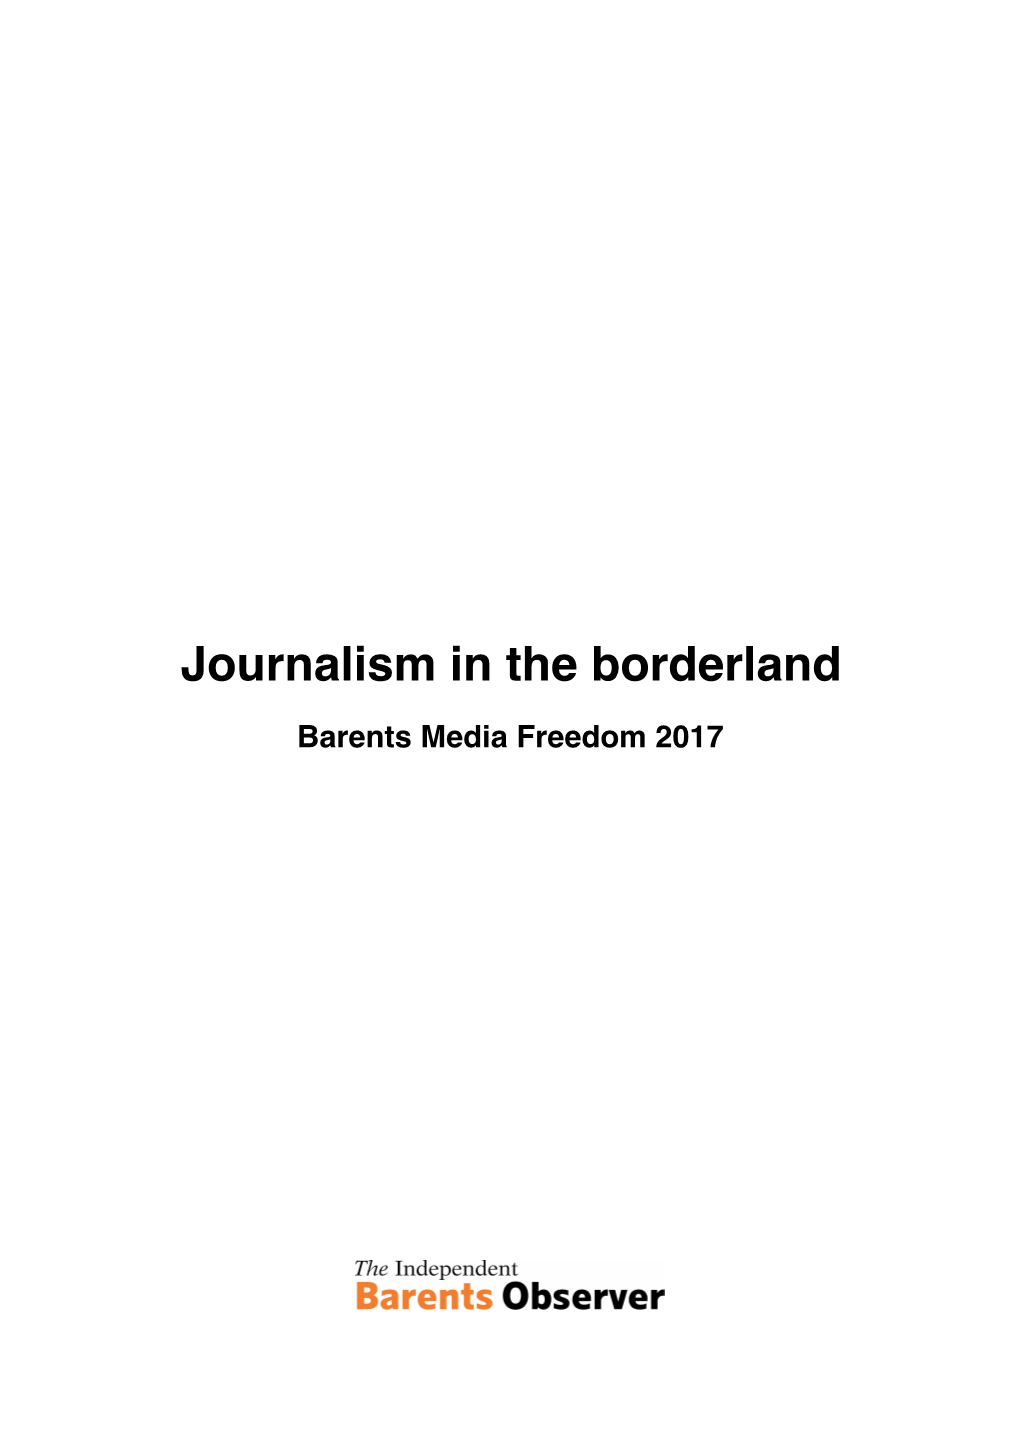 Journalism in the Borderland. Barents Media Freedom